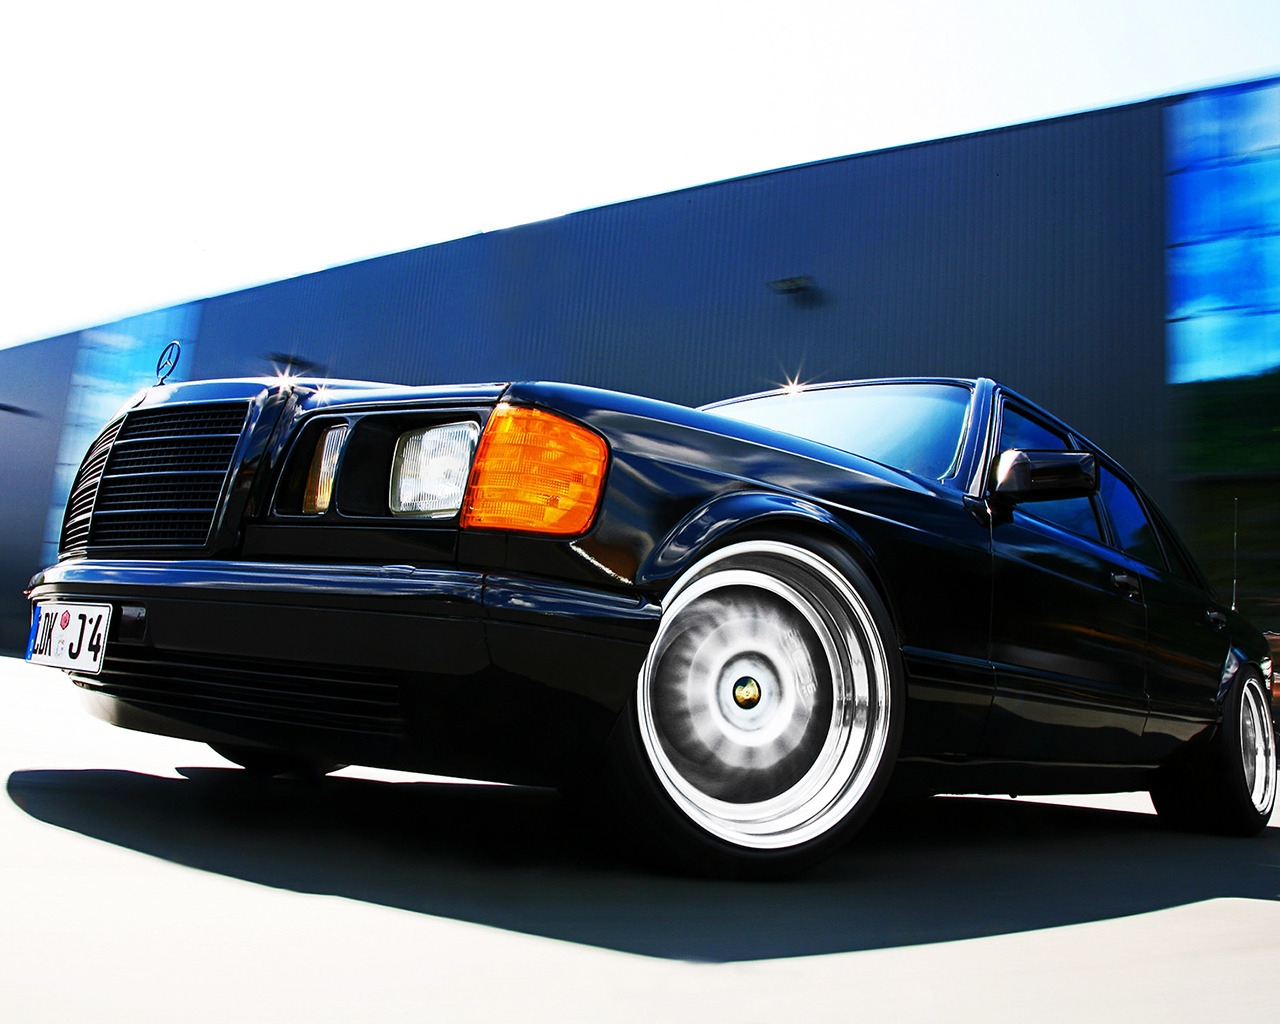 Mercedes 560SE 1991 for 1280 x 1024 resolution